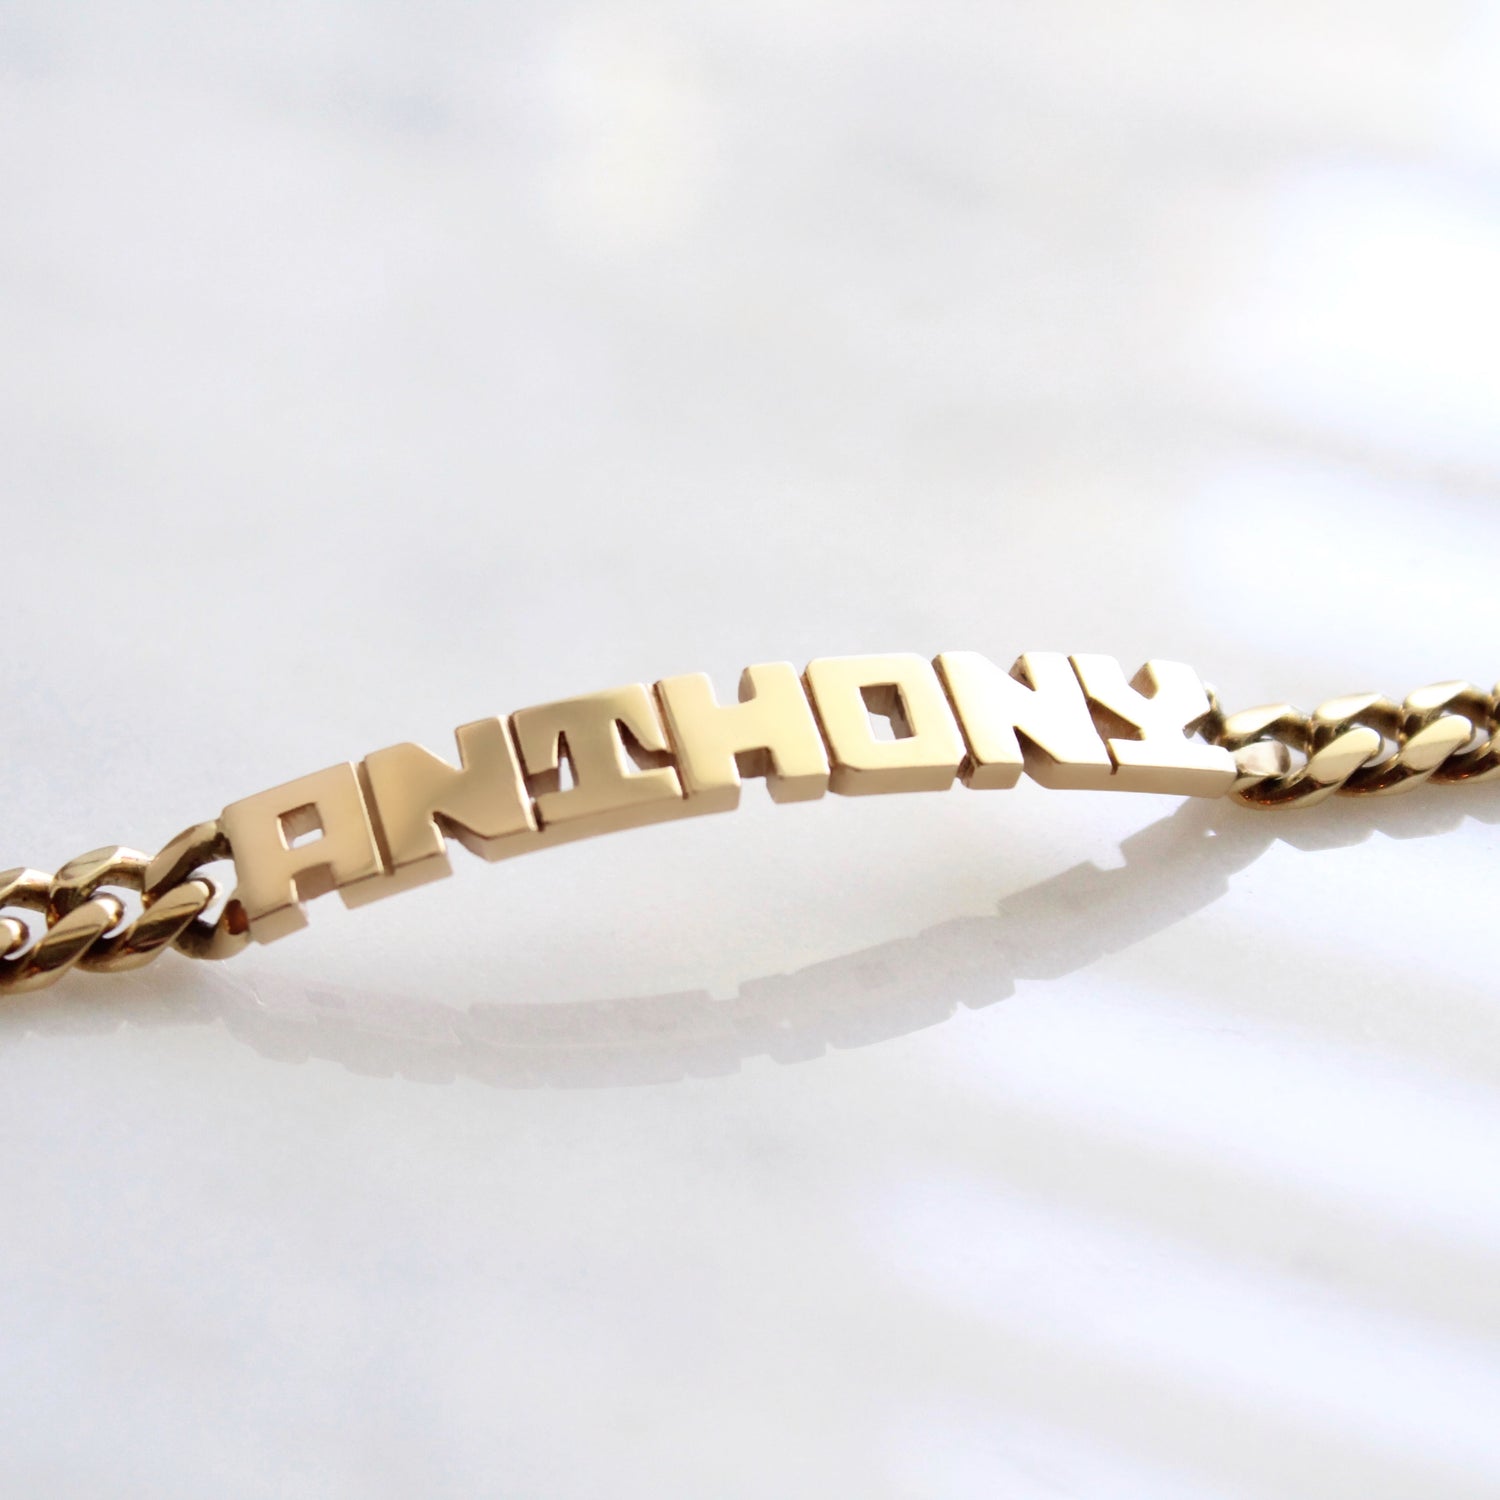 Kimiya Jewelers Name Chain Bracelet